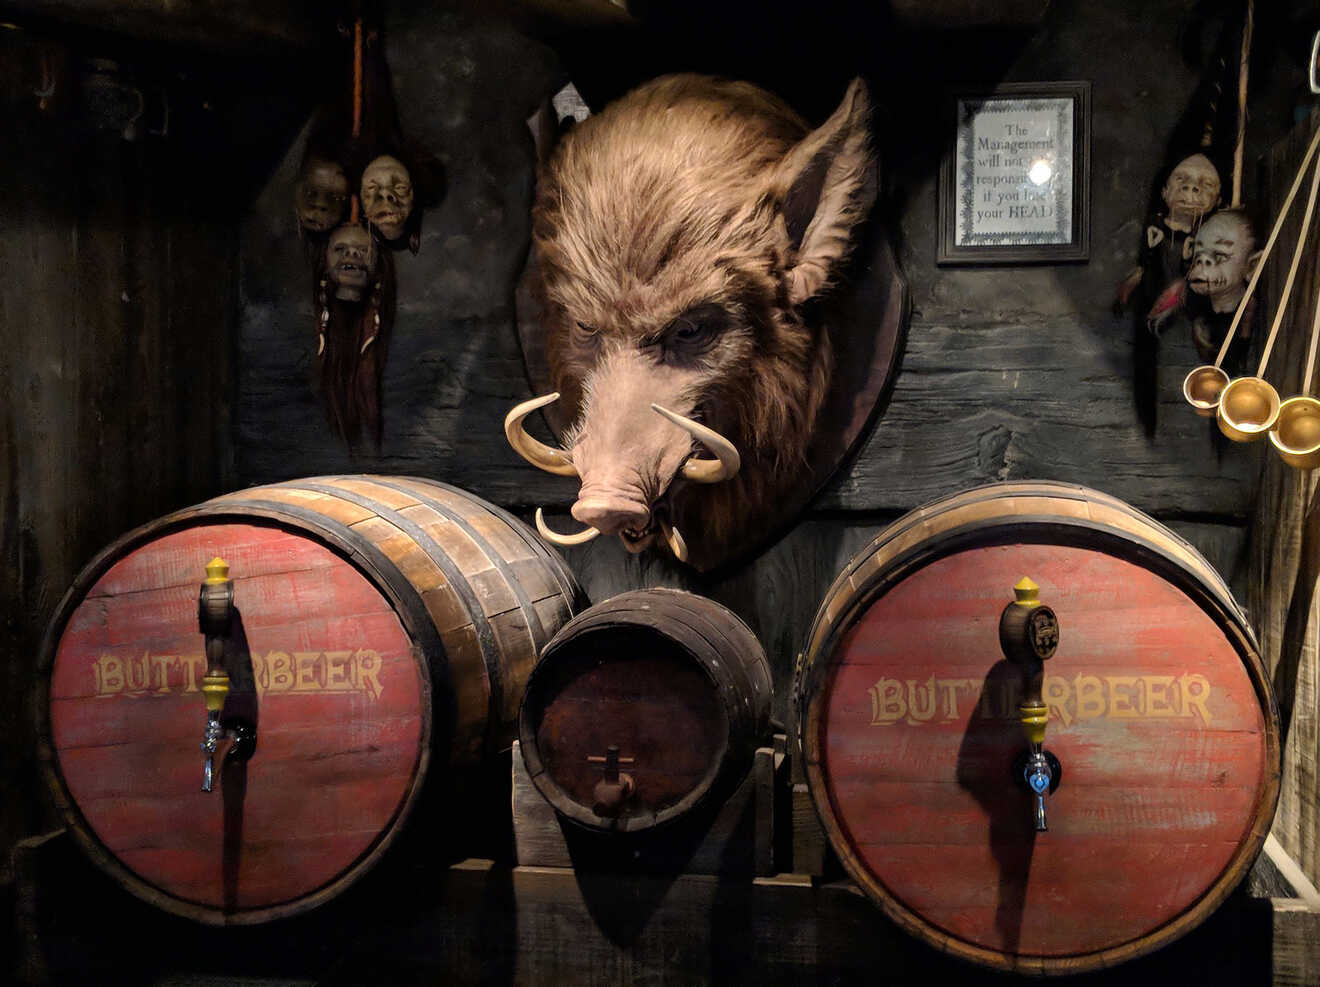 A hog's head between two barrels for butterbeer